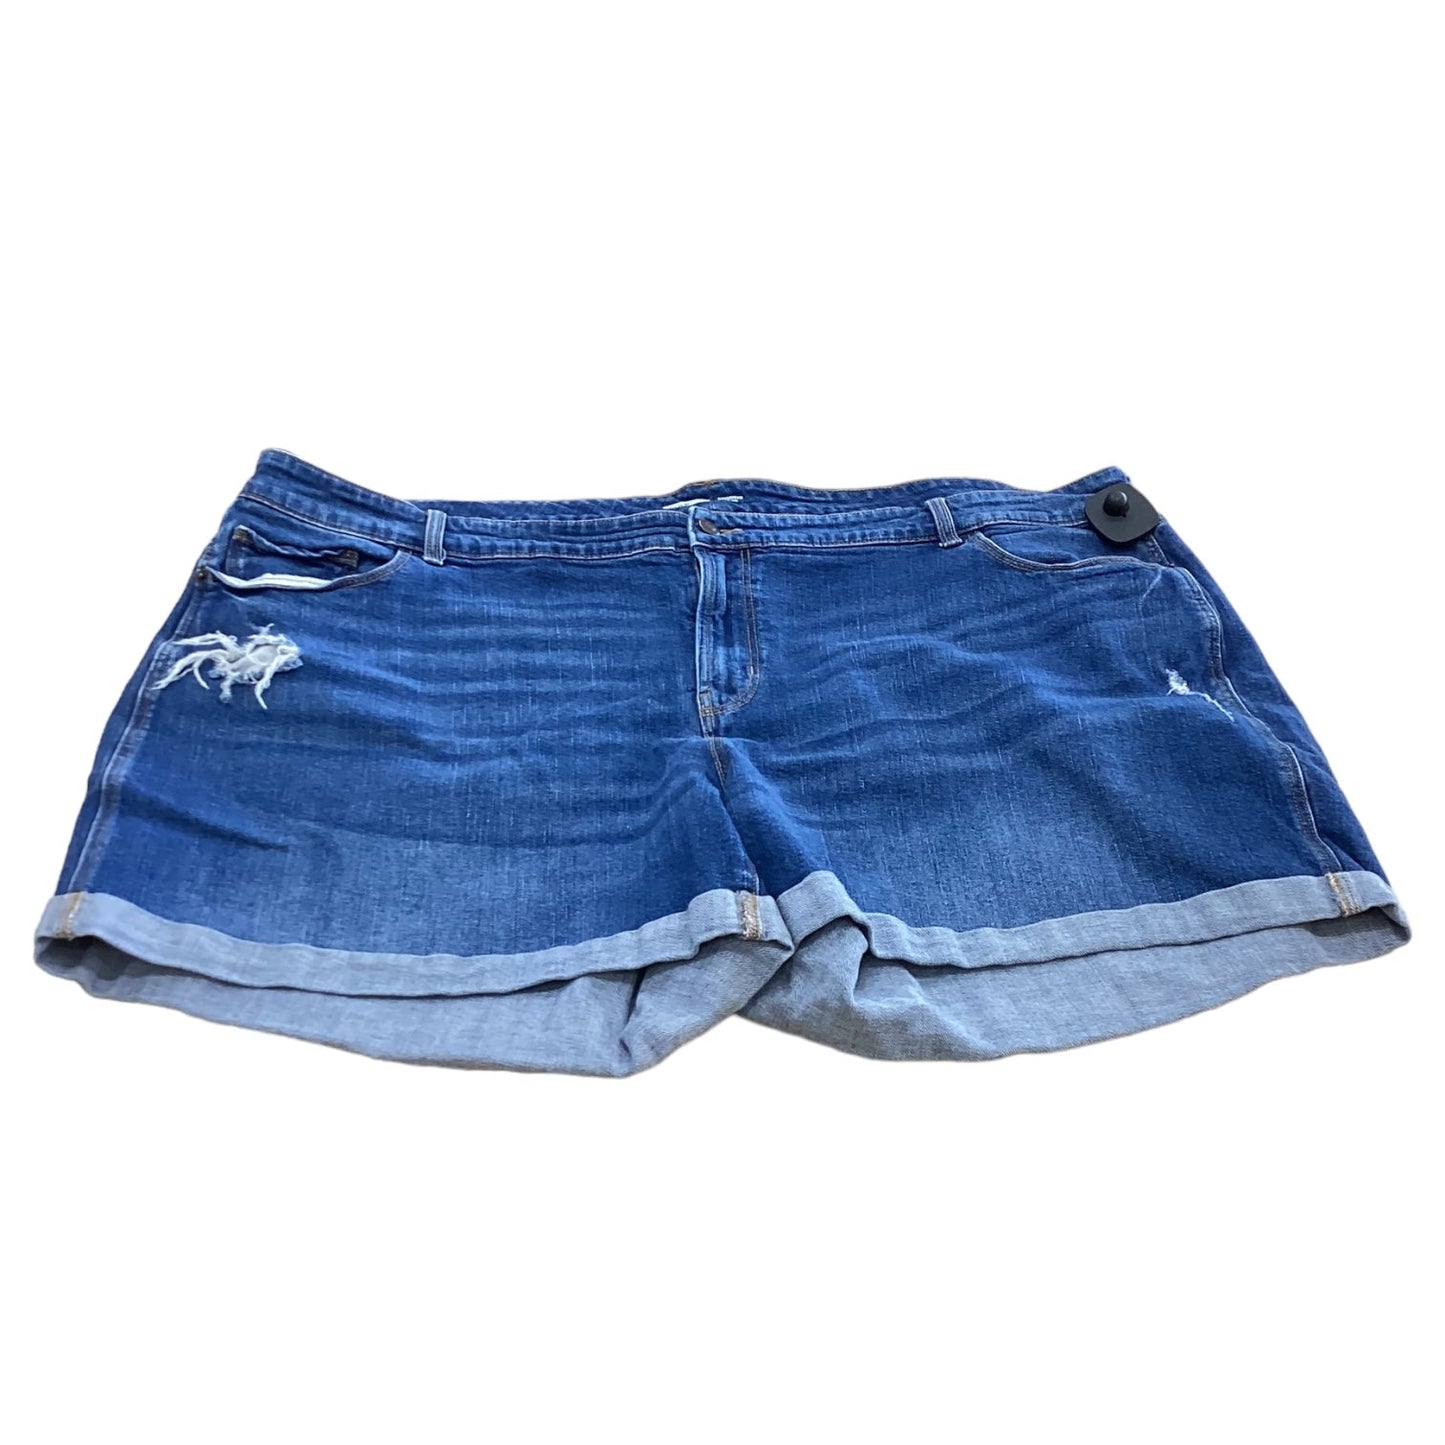 Blue Shorts Old Navy, Size 18